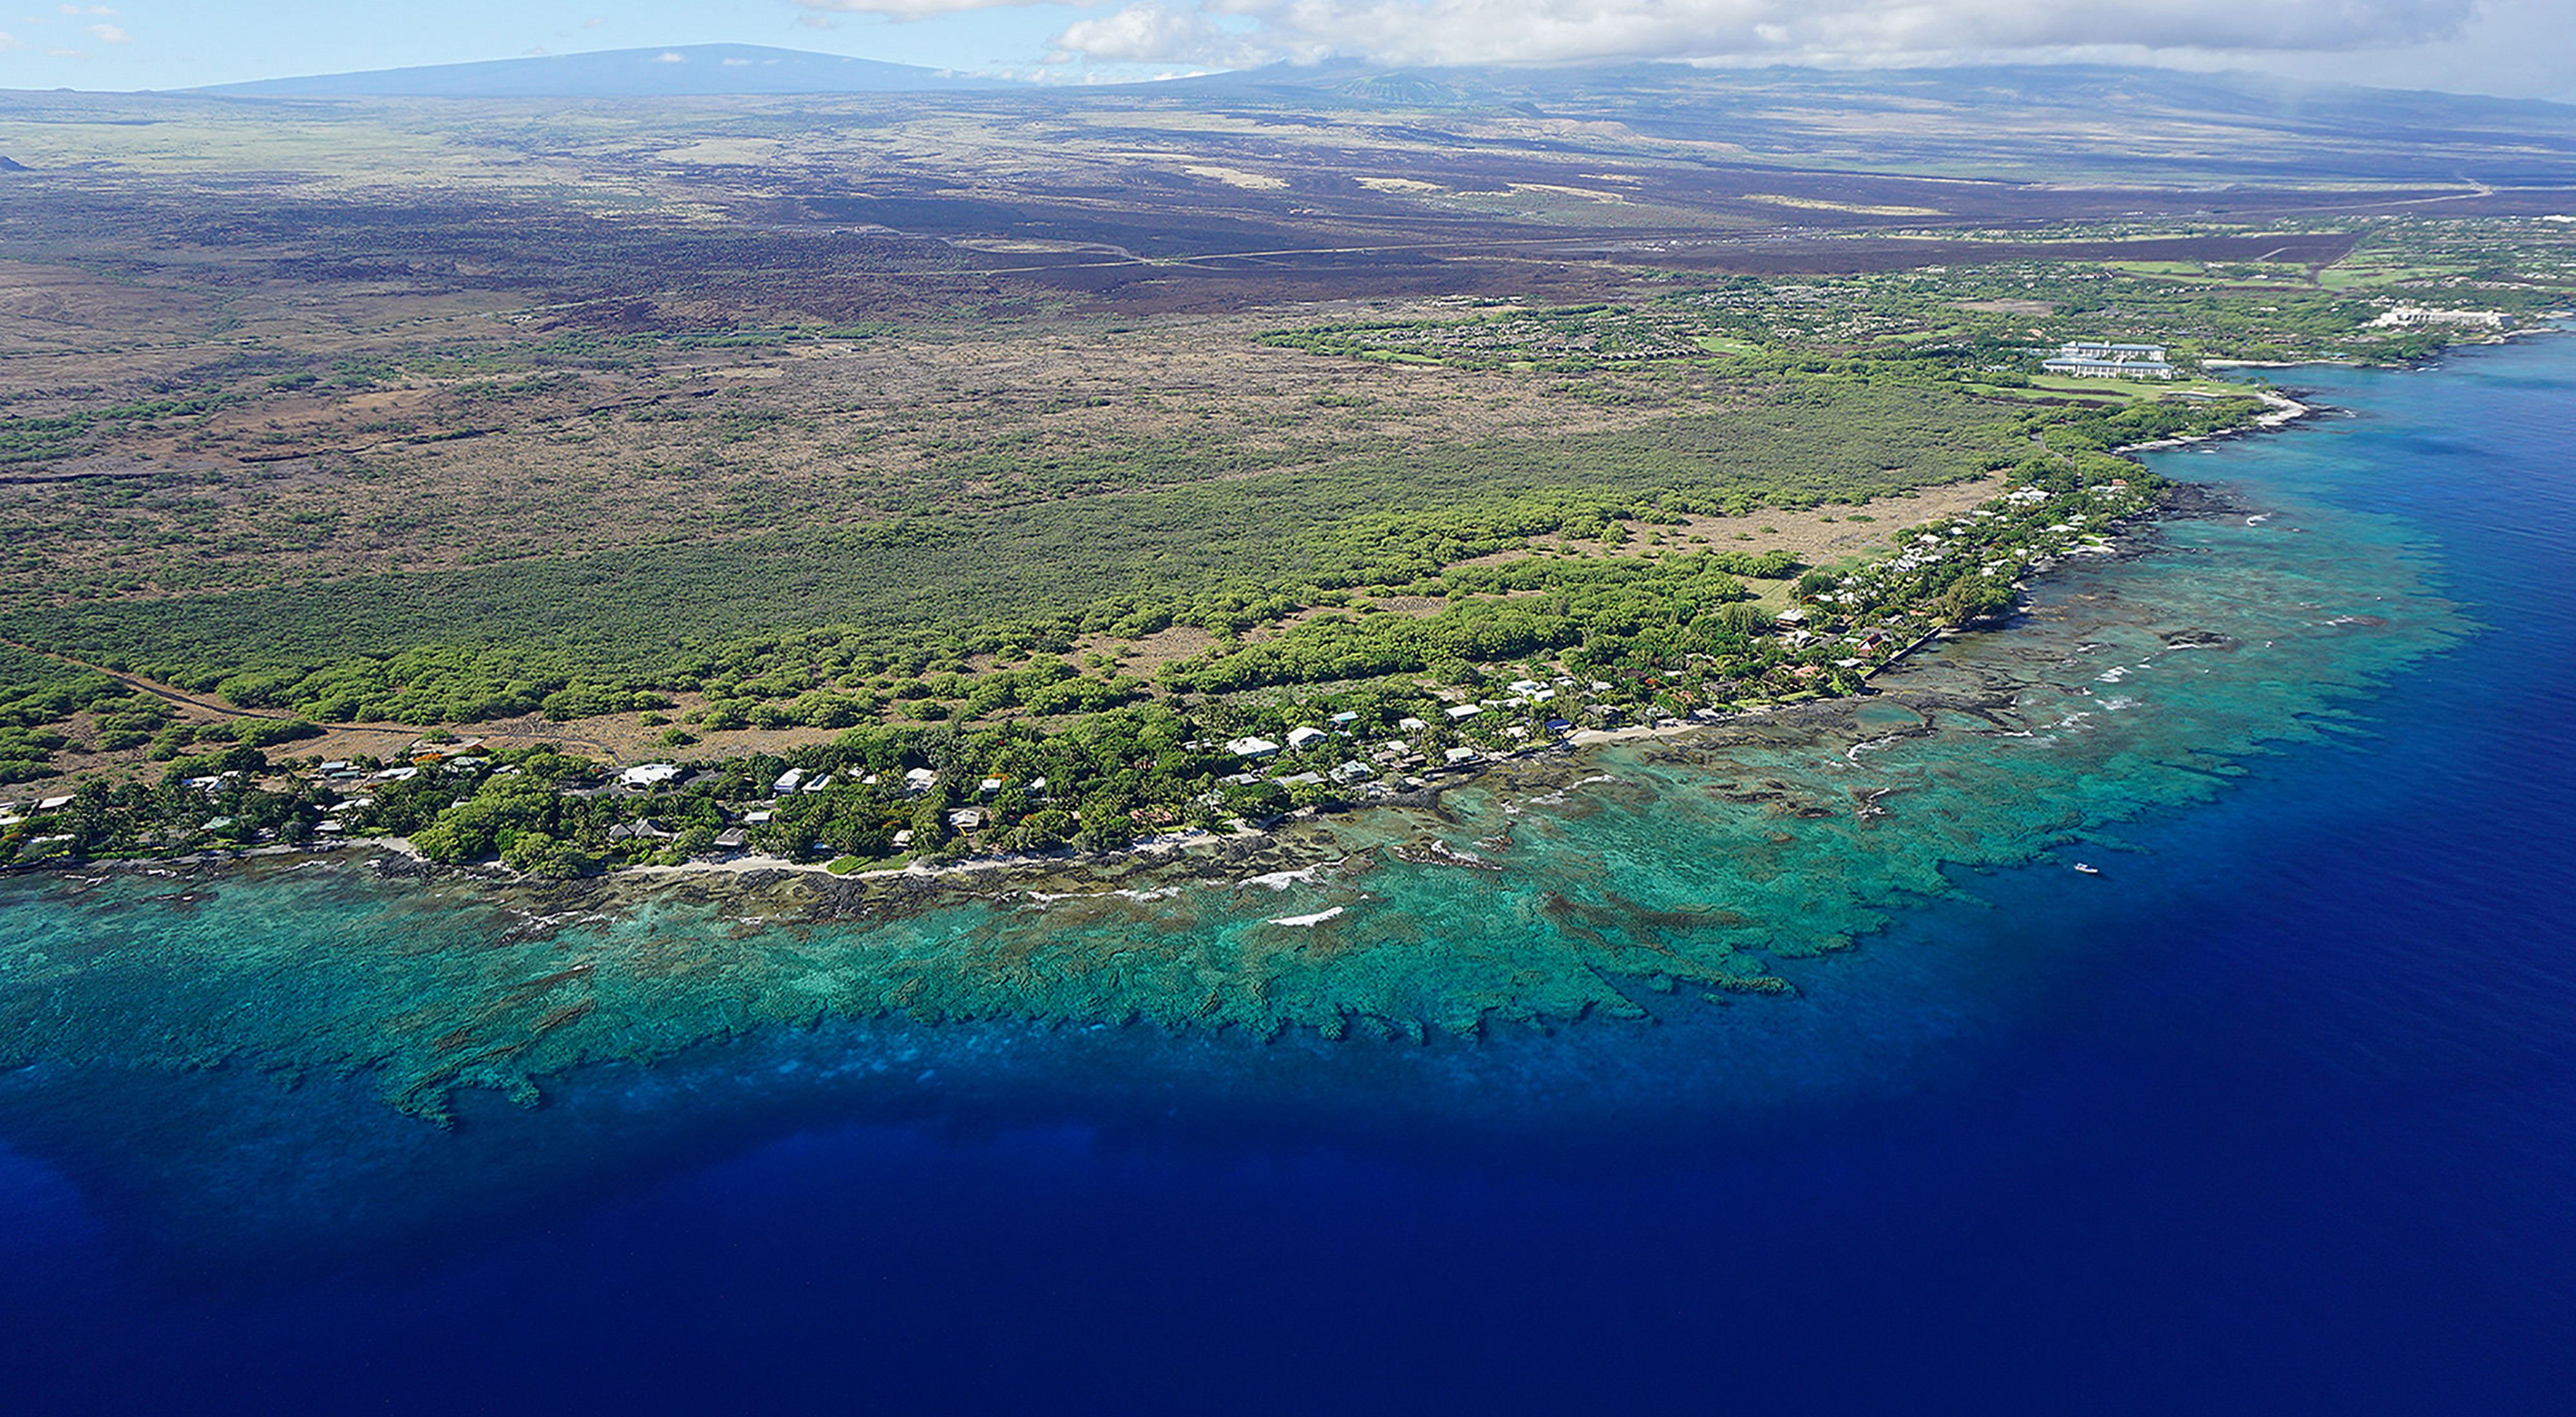 Aerial view of reef at Puakō, Hawaii.